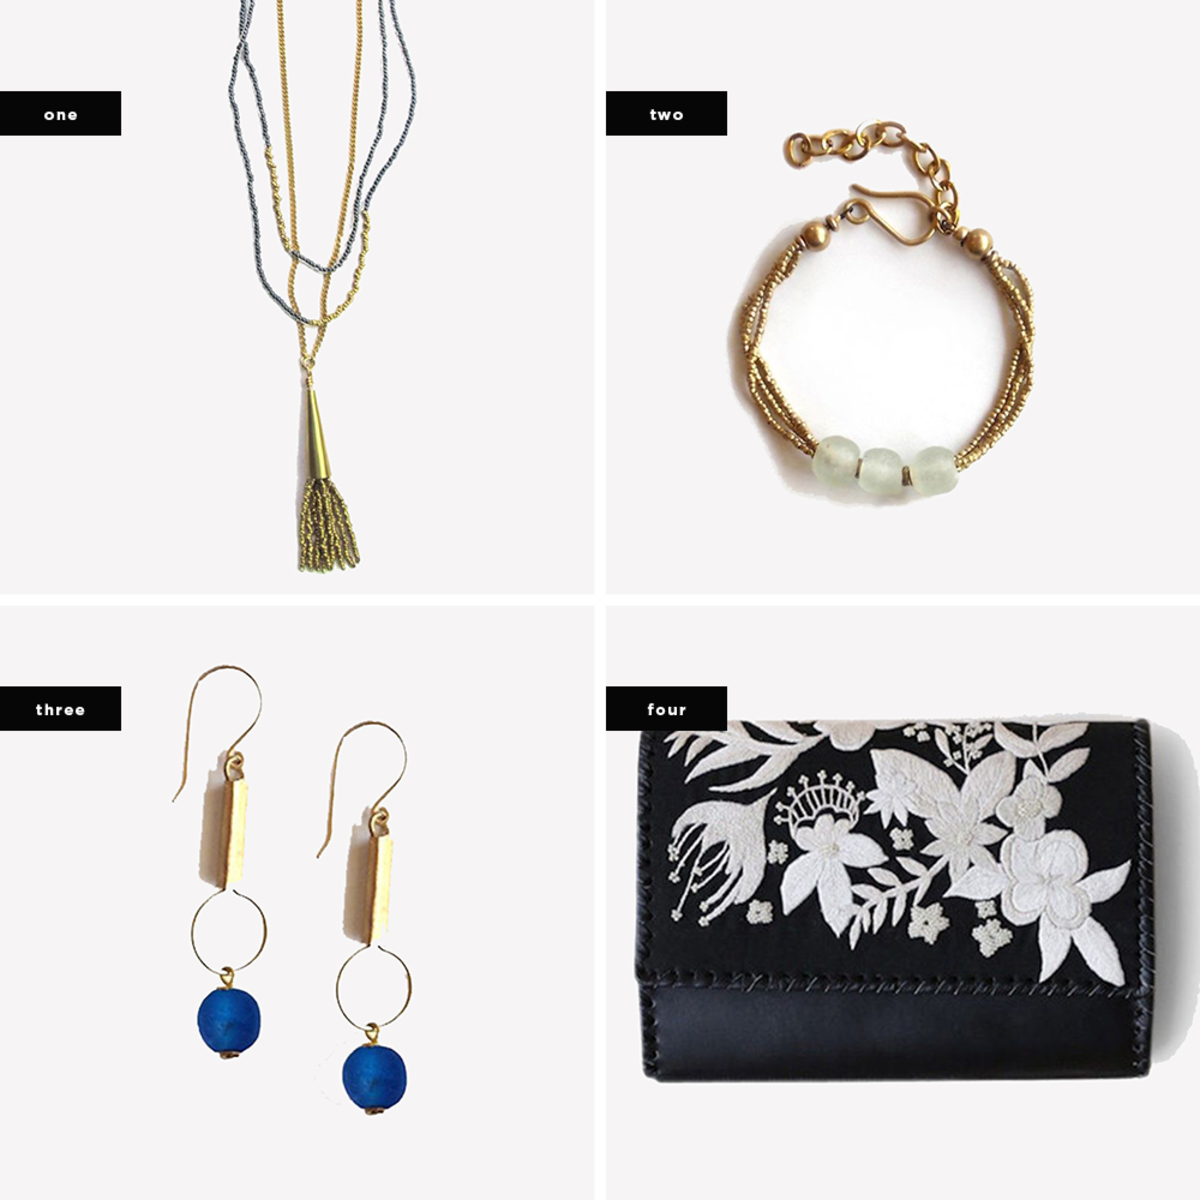 1. Alanna Masaai Beaded Tassel Necklace, $32 / 2. Anga Glass Tri-Bead Bracelet, $32 / 3. Mvua Glass Bead Drop Earrings, $22 / 4. Dama Clutch, $198